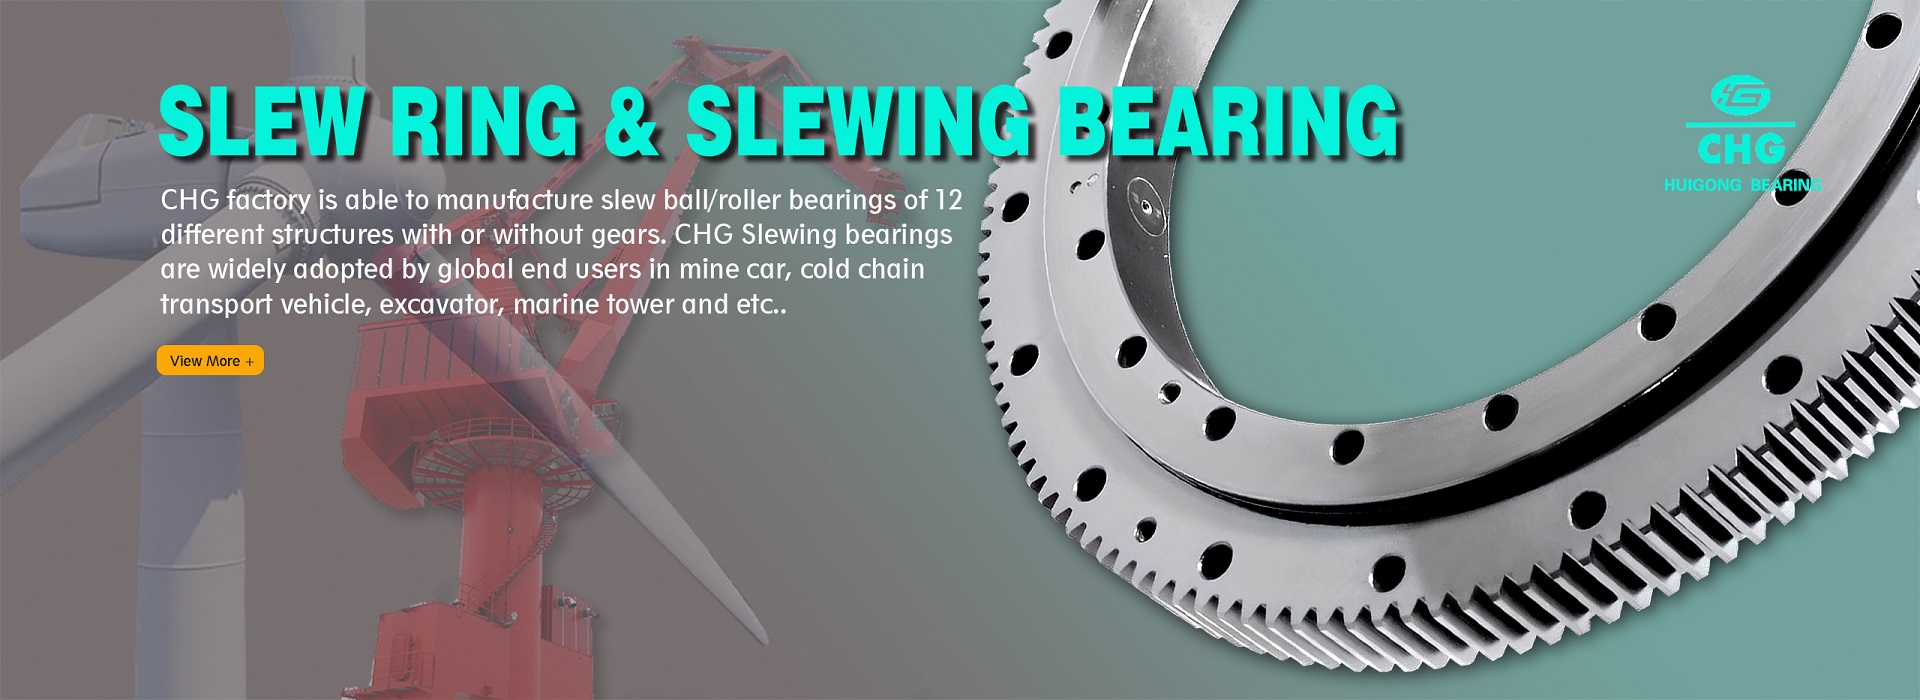 SLEW RING & SLEWING BEARING